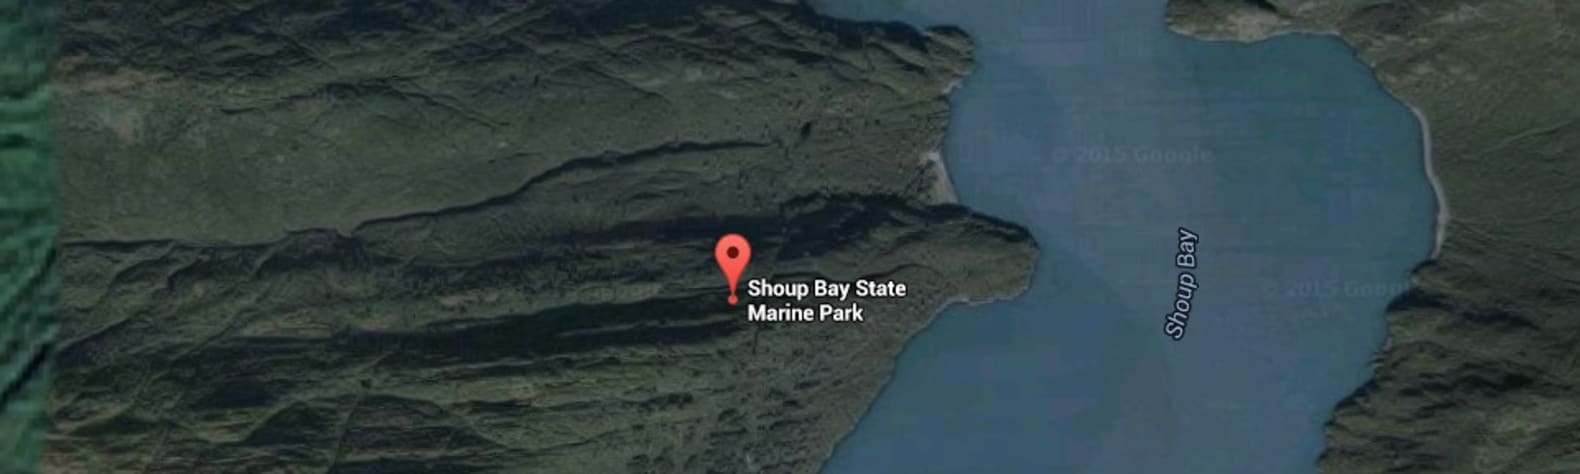 Shoup Bay State Marine Park